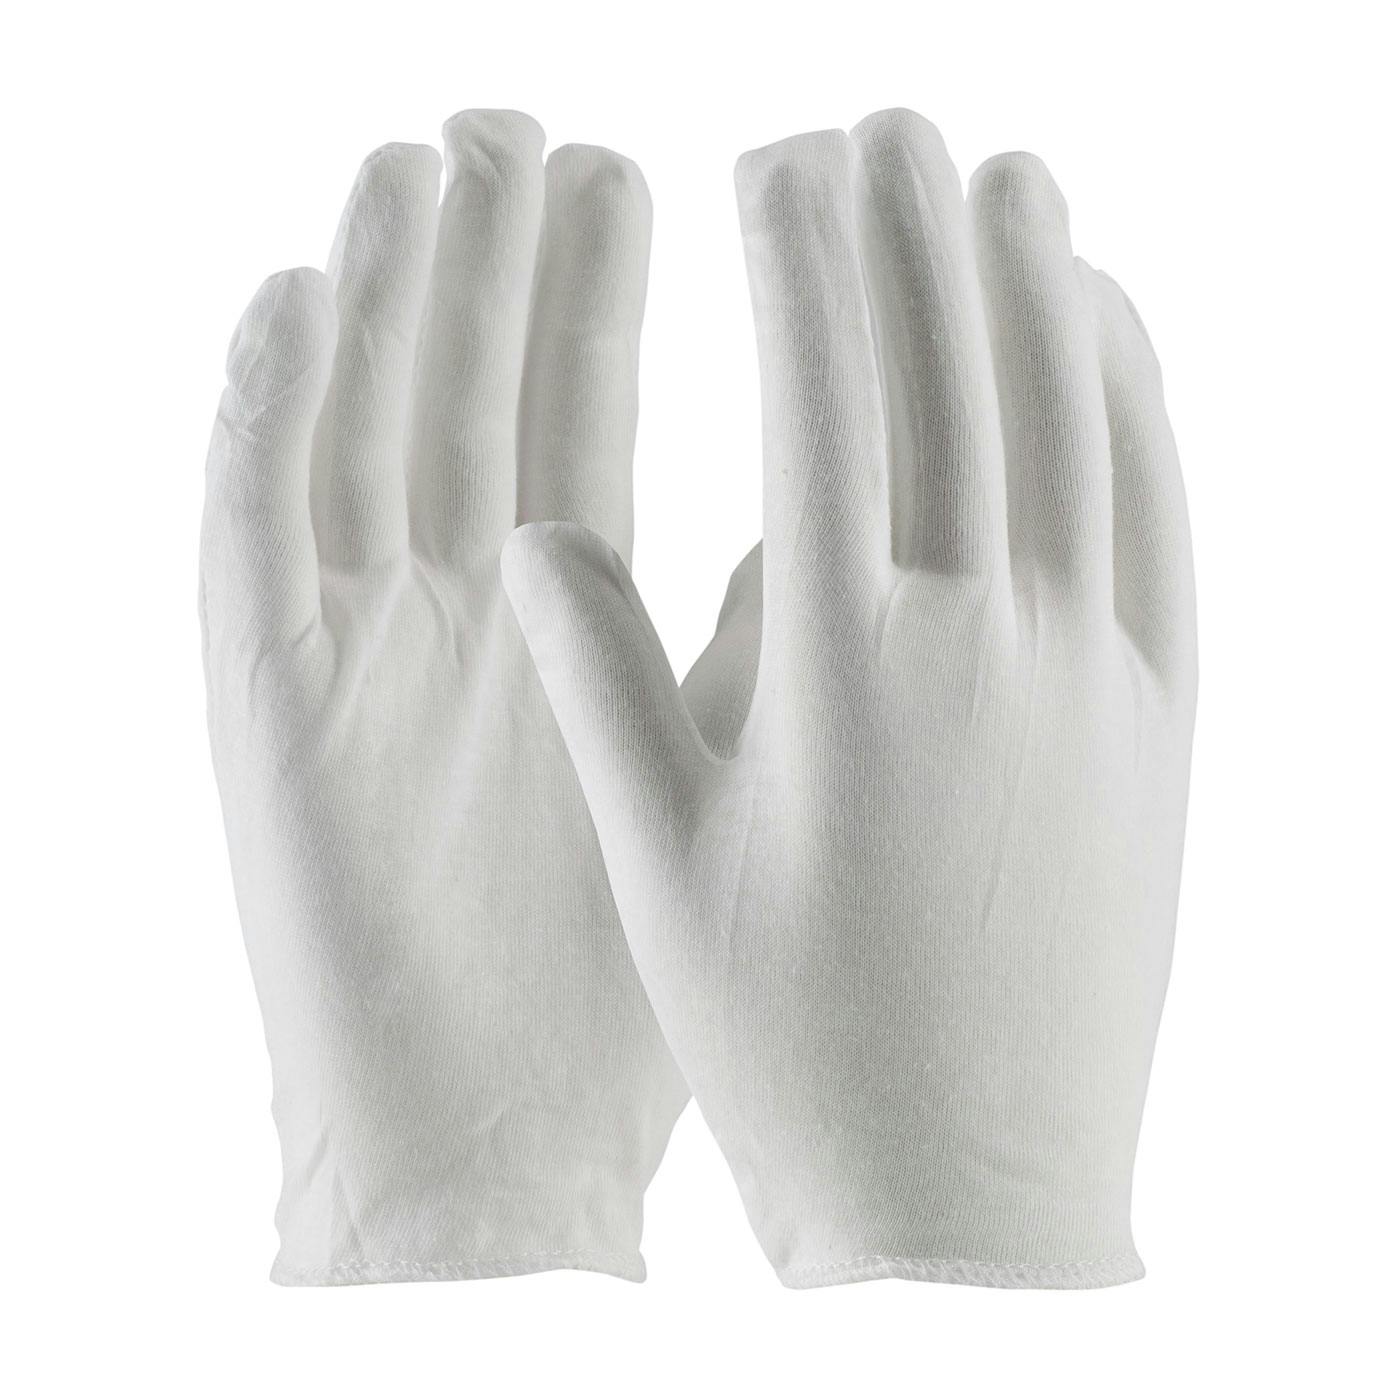 Premium, Light Weight Cotton Lisle Inspection Glove with Overcast Hem Cuff - Men's, White (97-500H) - MENS